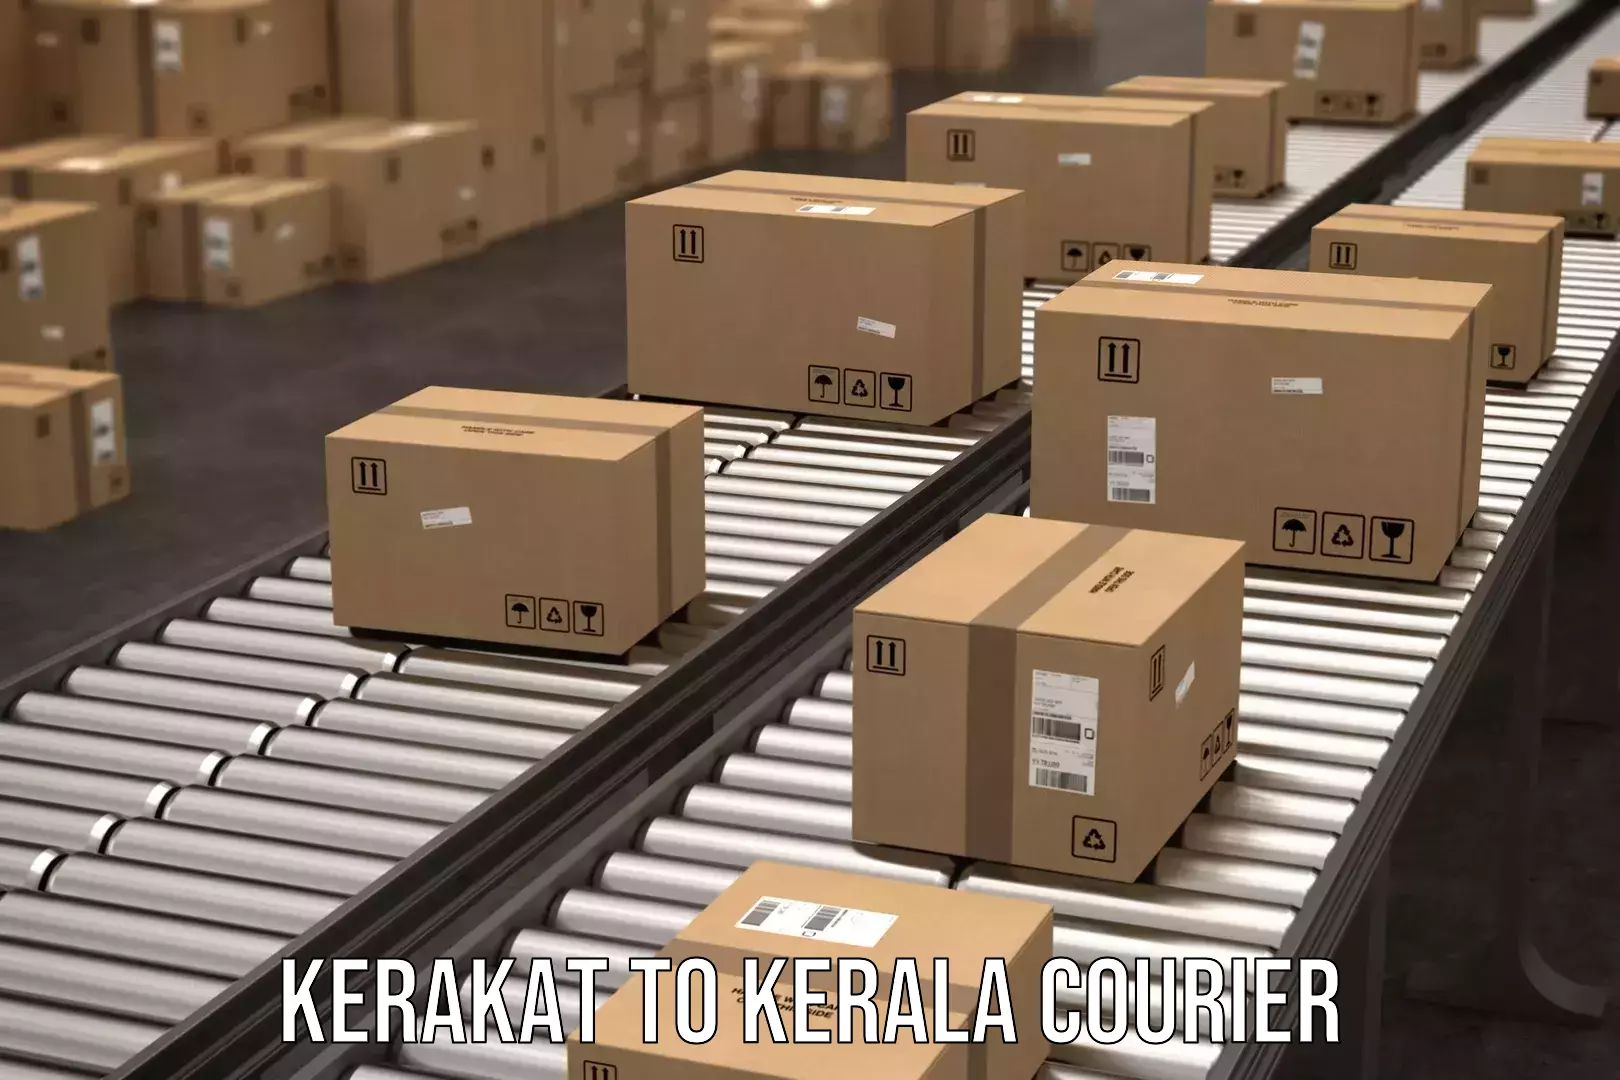 Rural area delivery Kerakat to Kerala